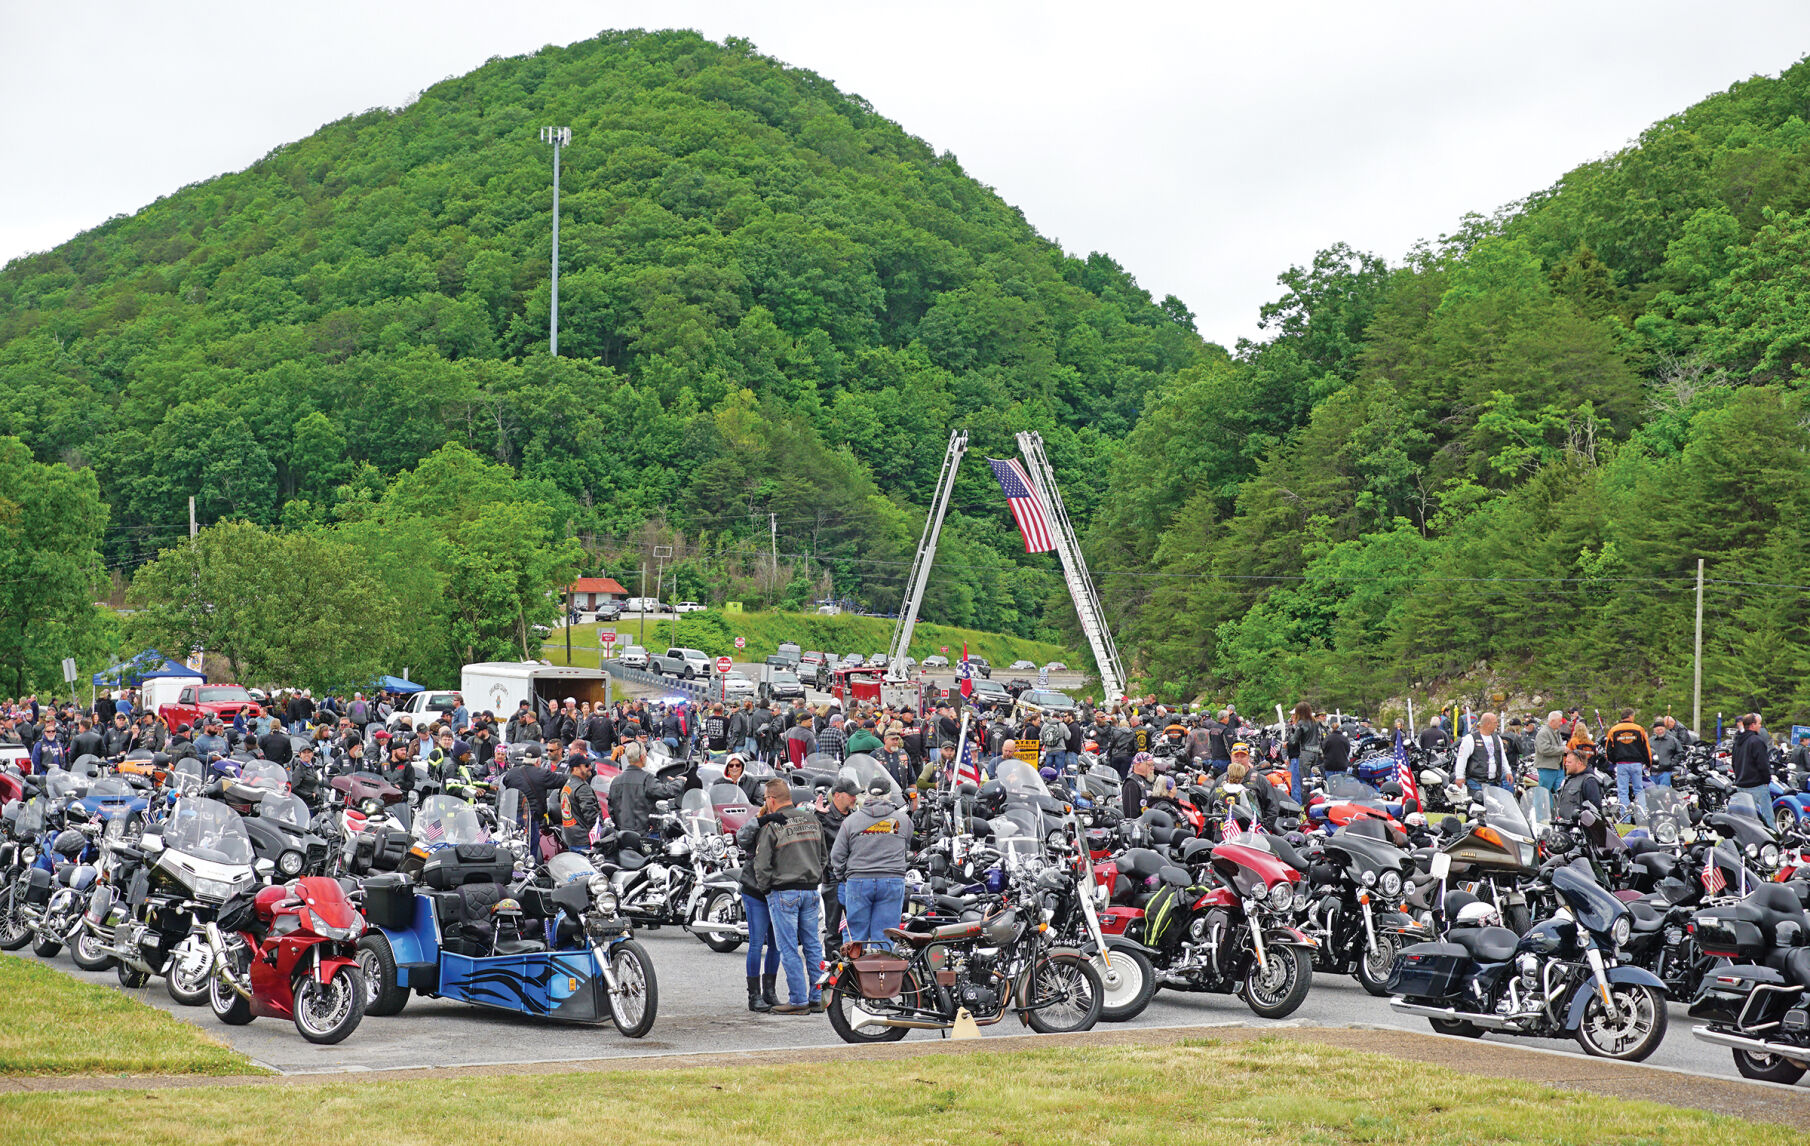 Smoky Mountain Thunder Memorial Ride honors fallen military members